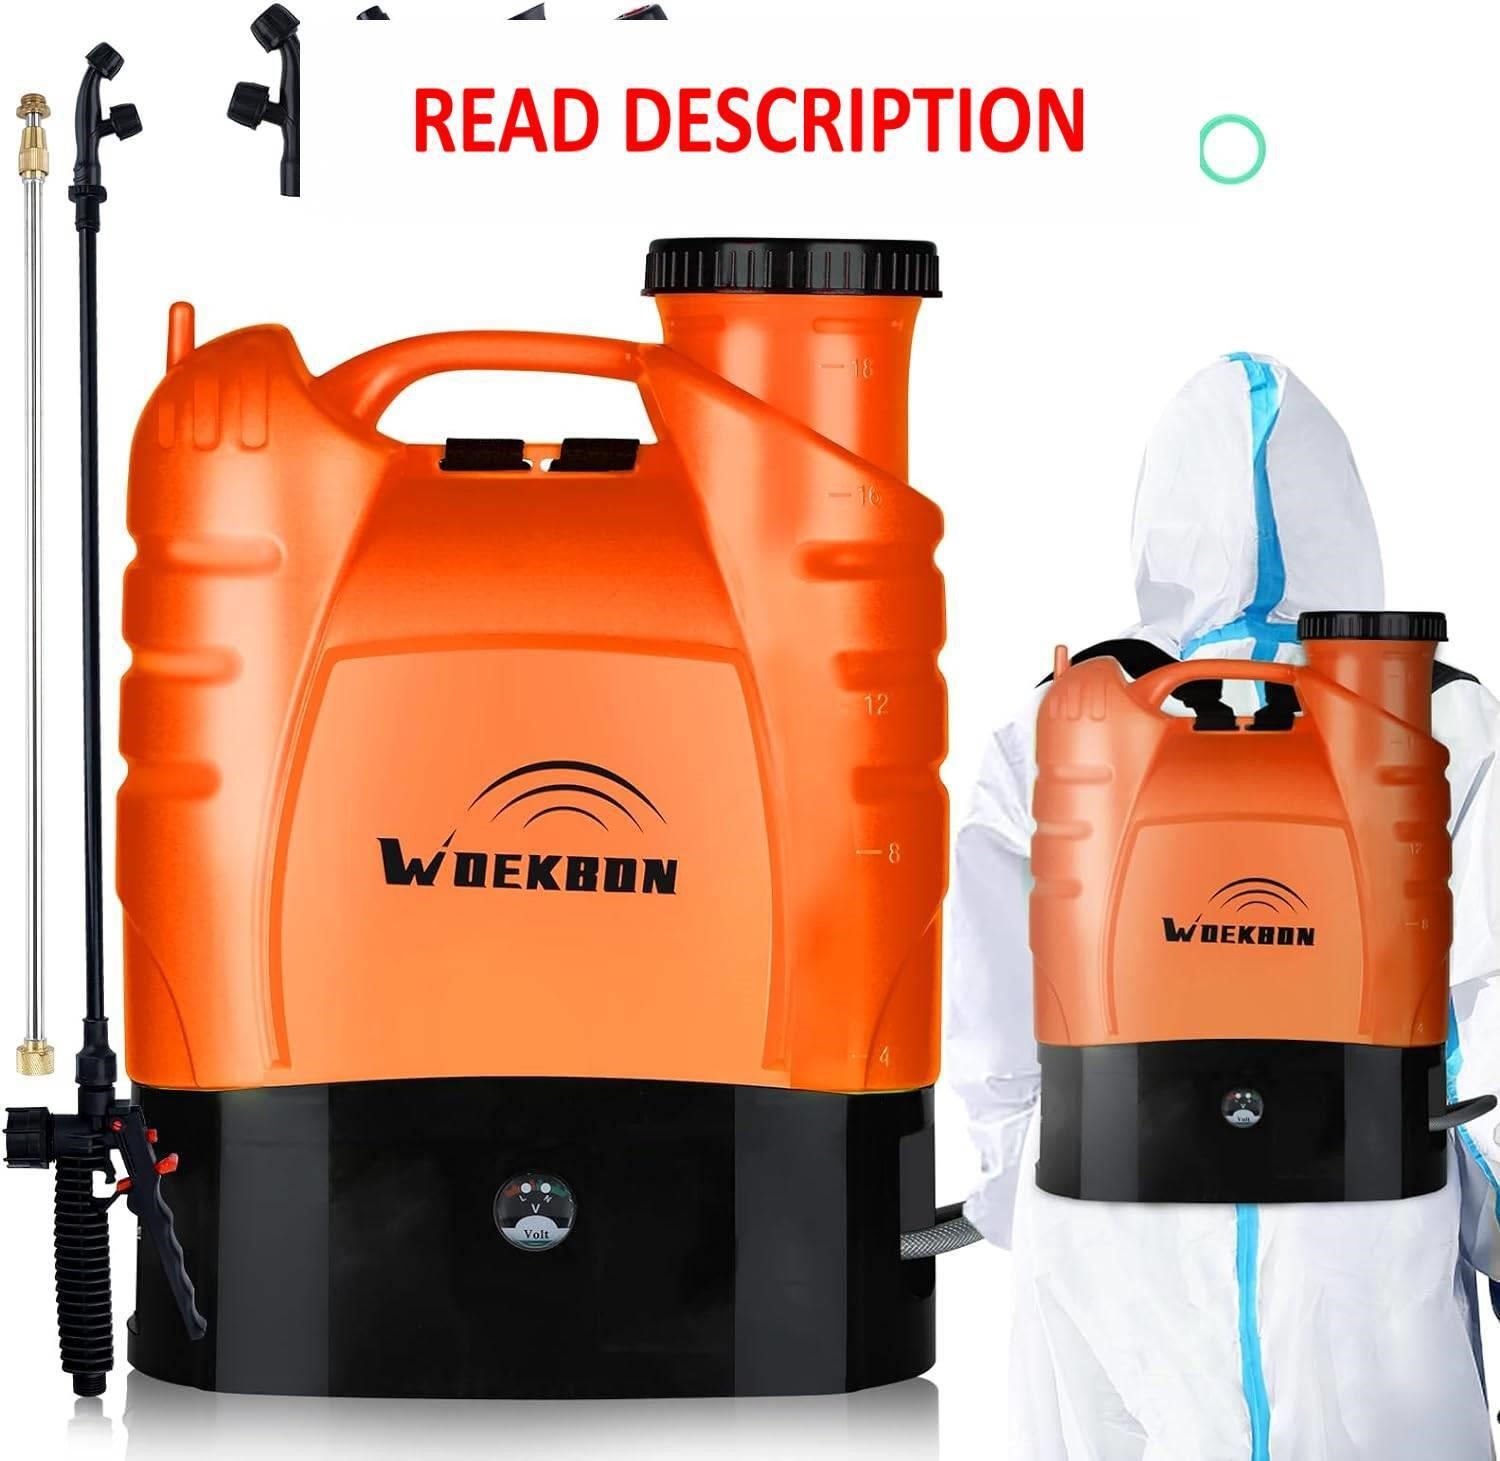 $80  WOEKBON 4 GAL Battery Powered Backpack Spraye